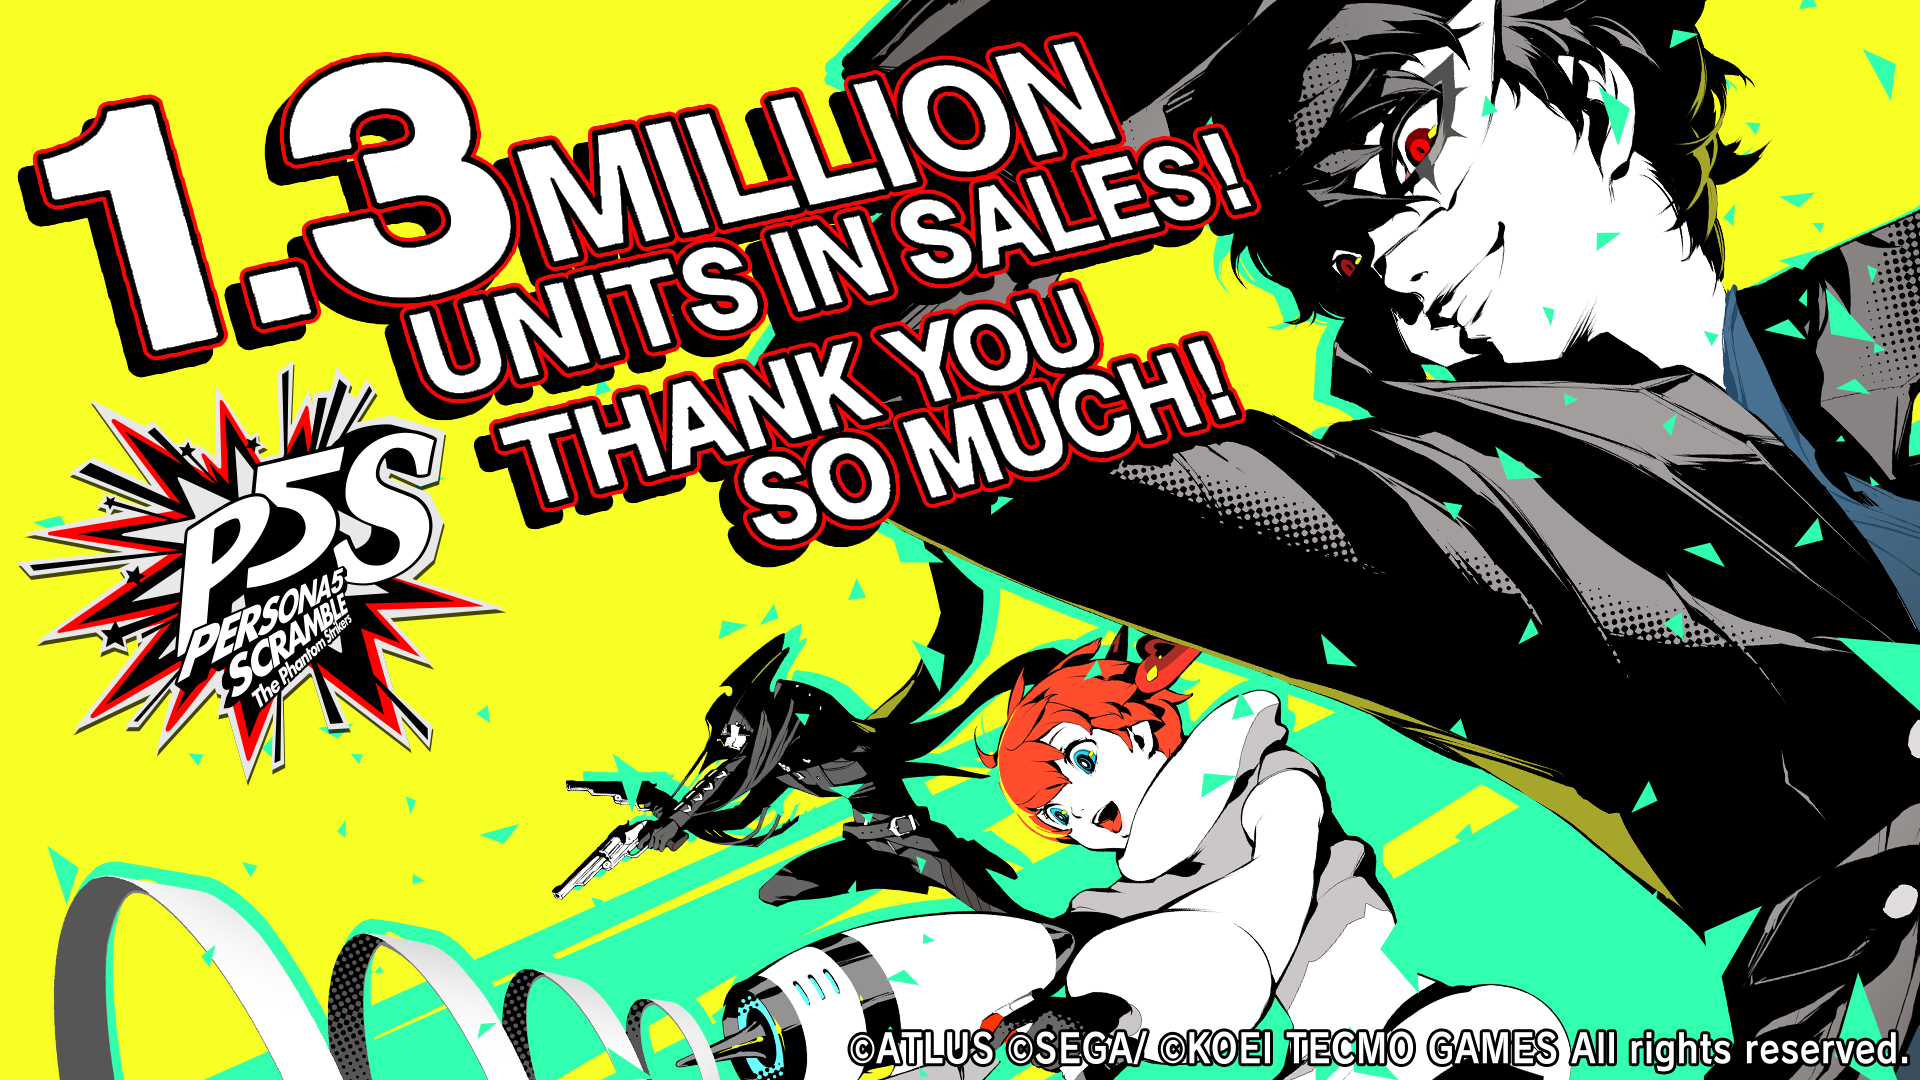 Persona 5 Strikers มียอดส่งรวมยอดขายแบบดิจิทัลทะลุ 1.3 ล้านชุดทั่วโลก